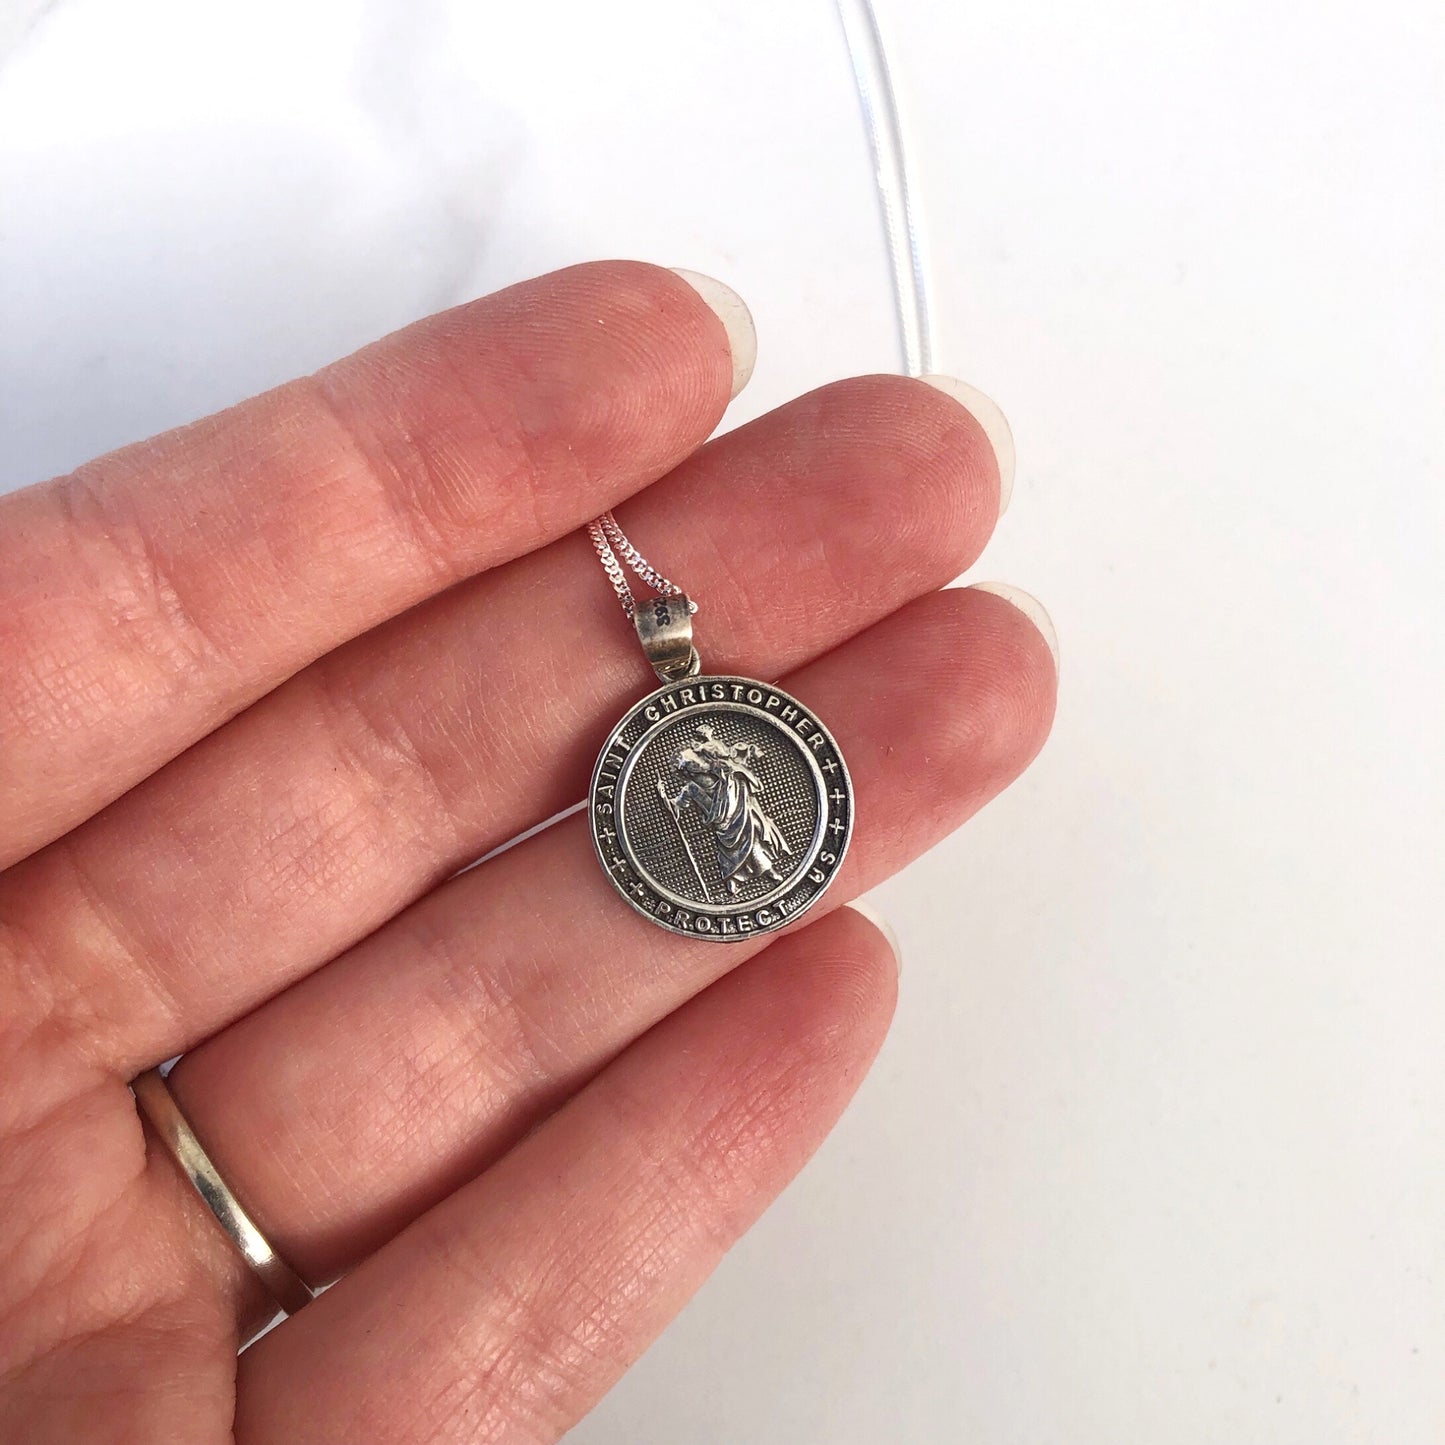 Necklace: St Christopher 50cm chain